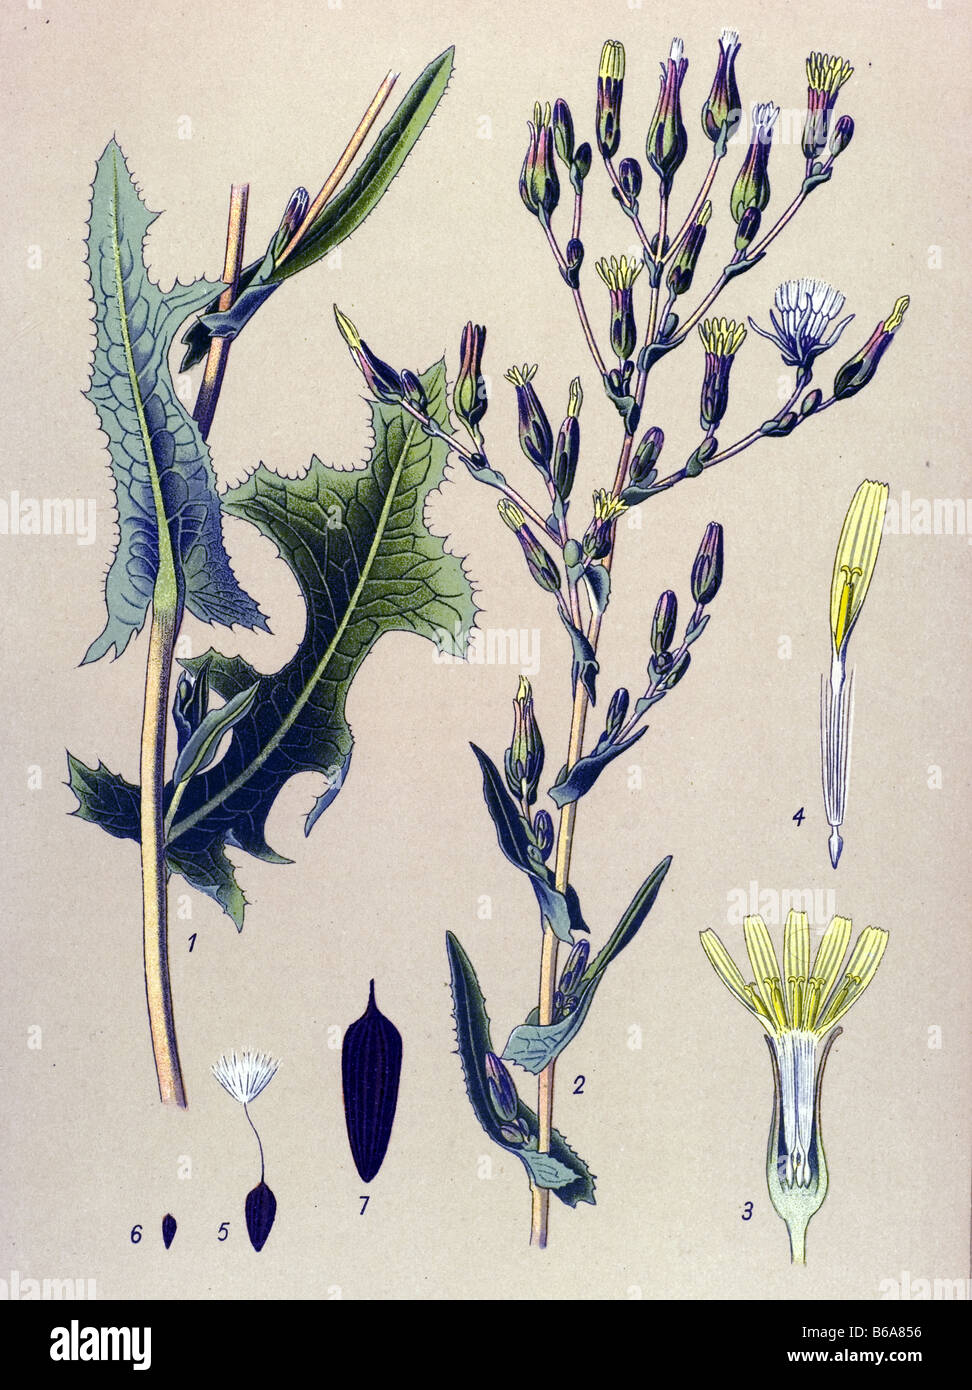 Prickly Lettuce, Lactuca serriola, Lactuca scariola poisonous plants illustrations Stock Photo